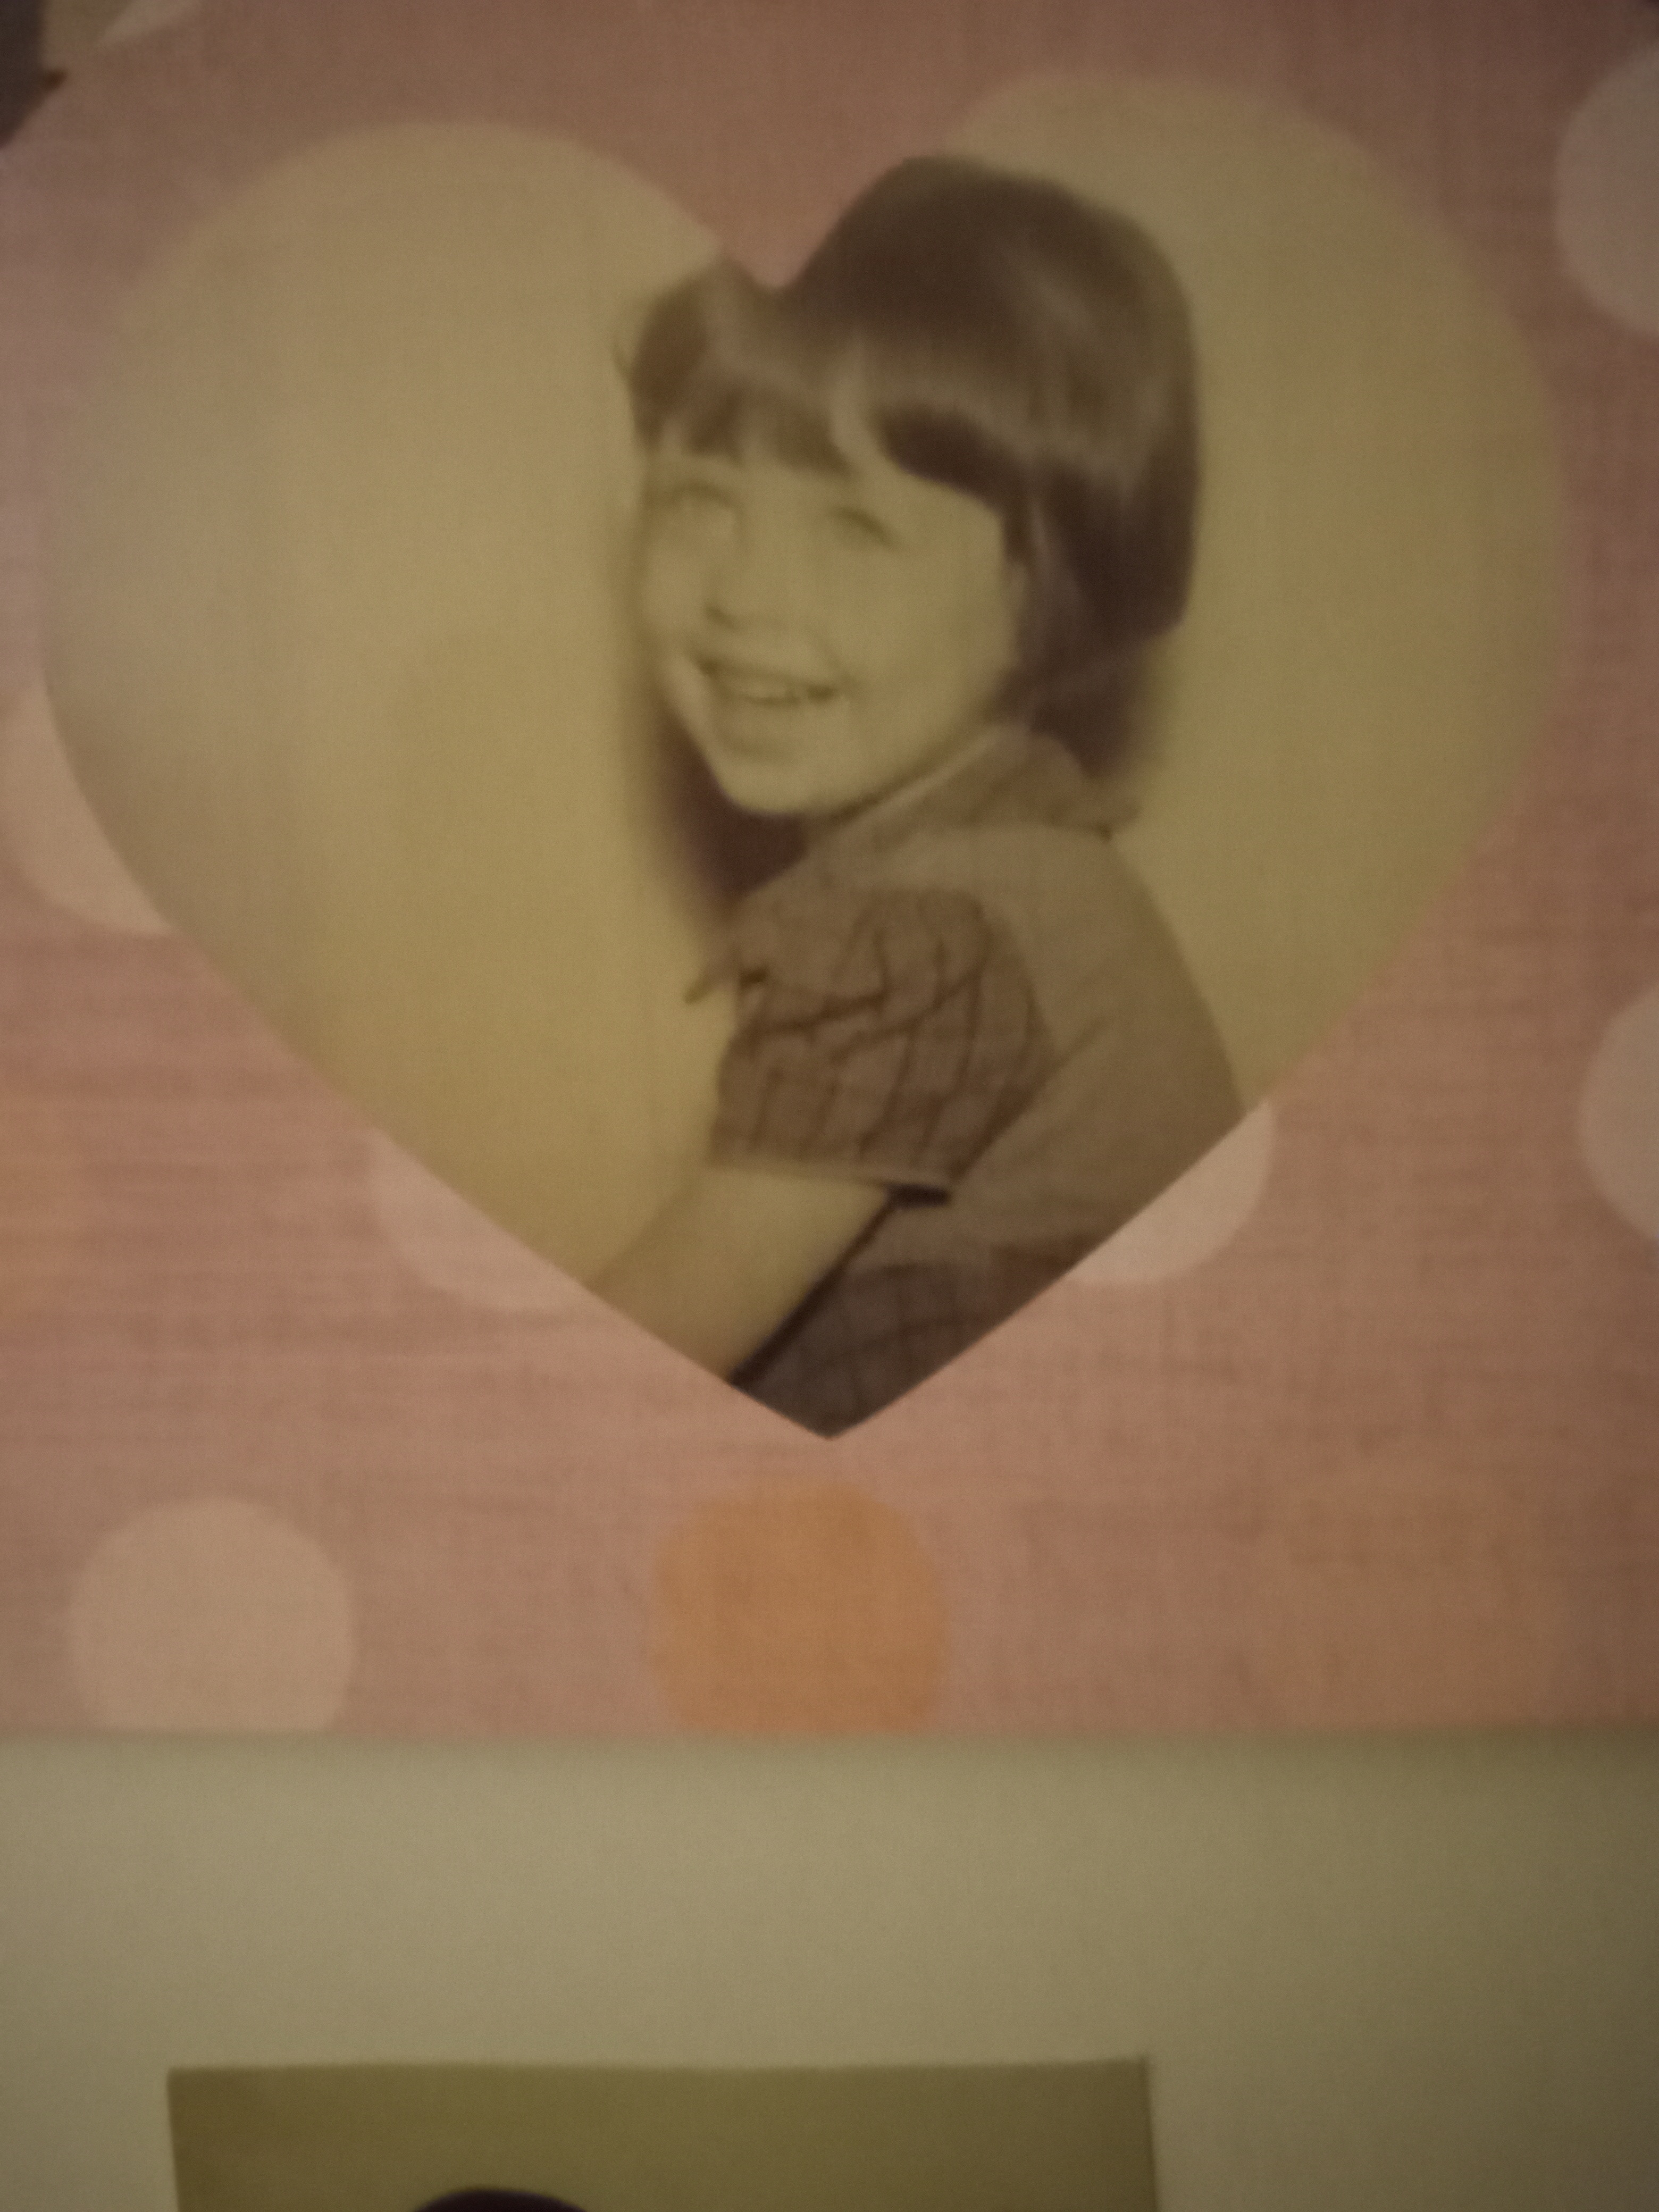 My mom Brenda when she was a child 